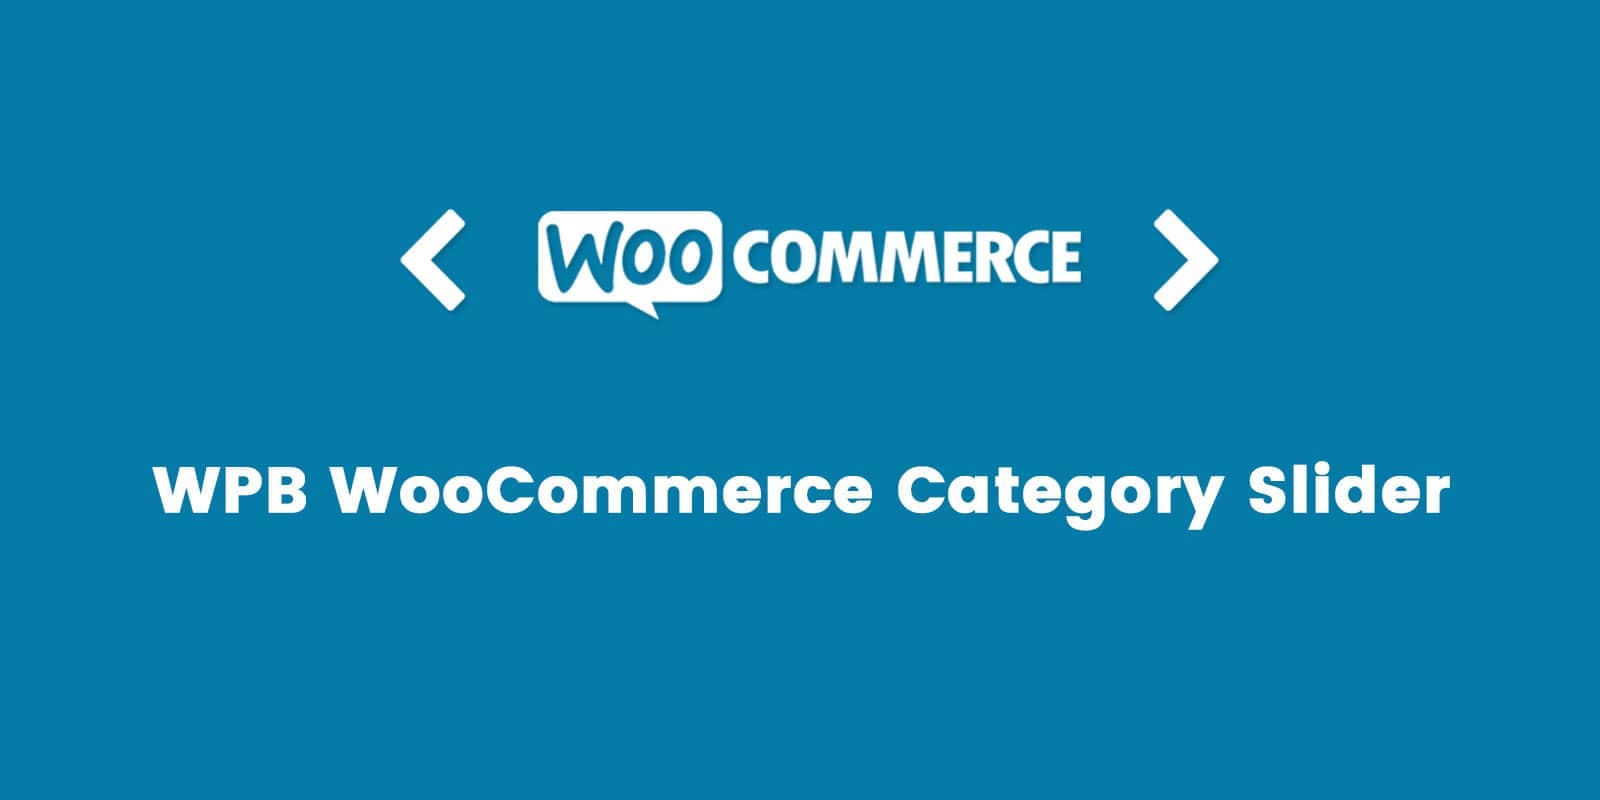 WPB WooCommerce Category Slider